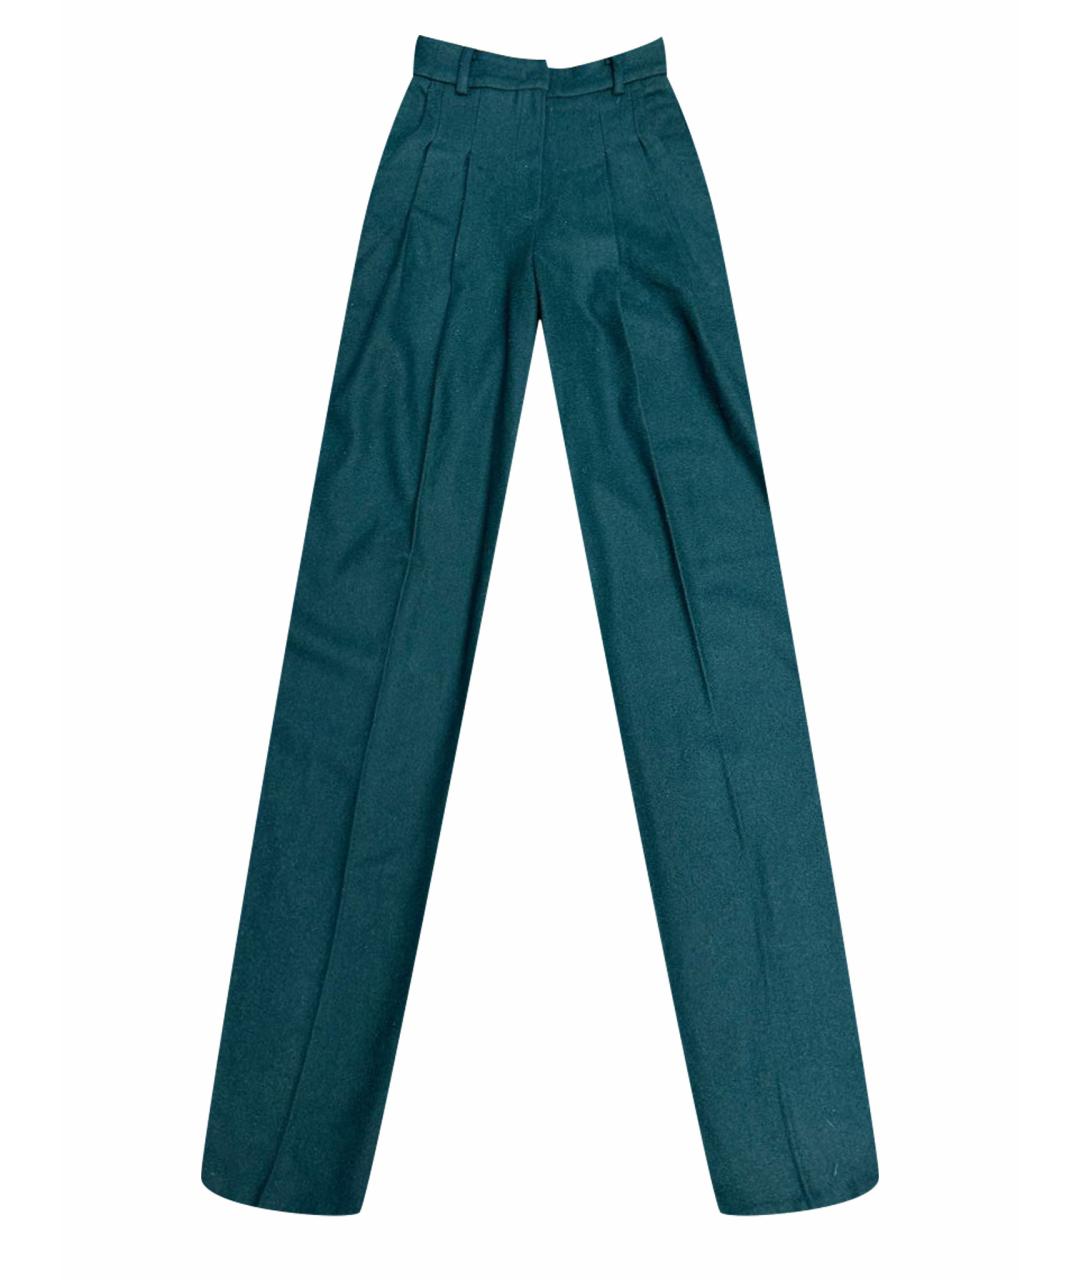 THE FRANKIE SHOP Зеленые брюки широкие, фото 1